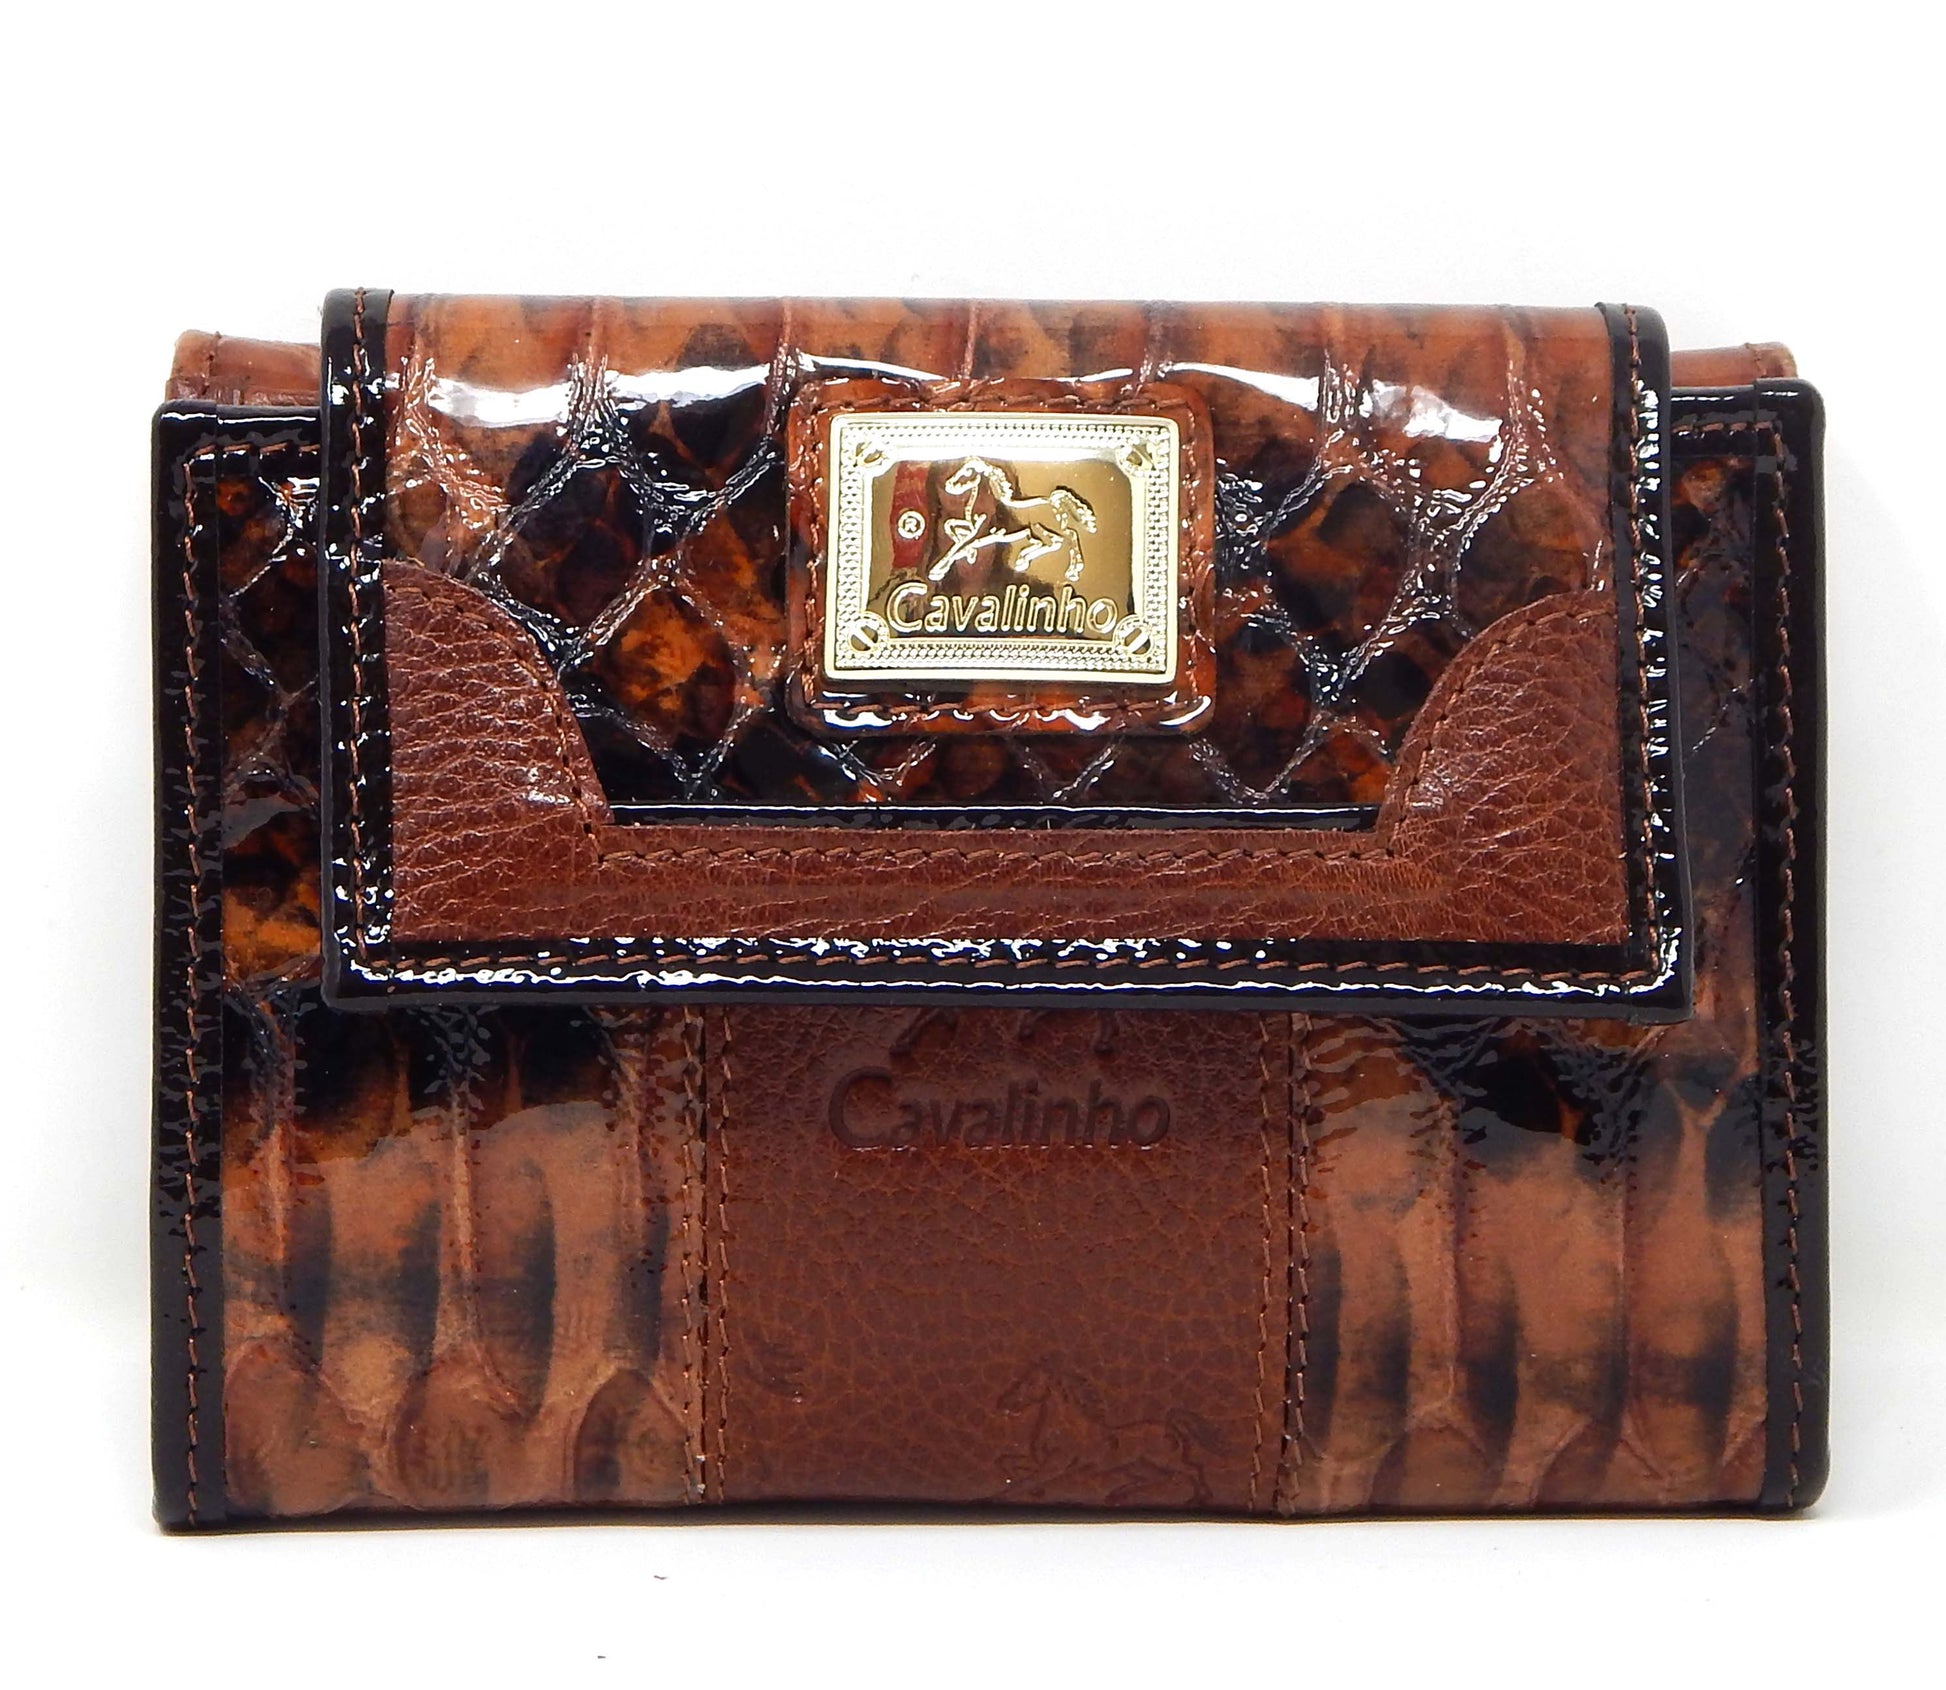 Cavalinho Honor Leather Wallet - SaddleBrown - 28190219.13.99_1